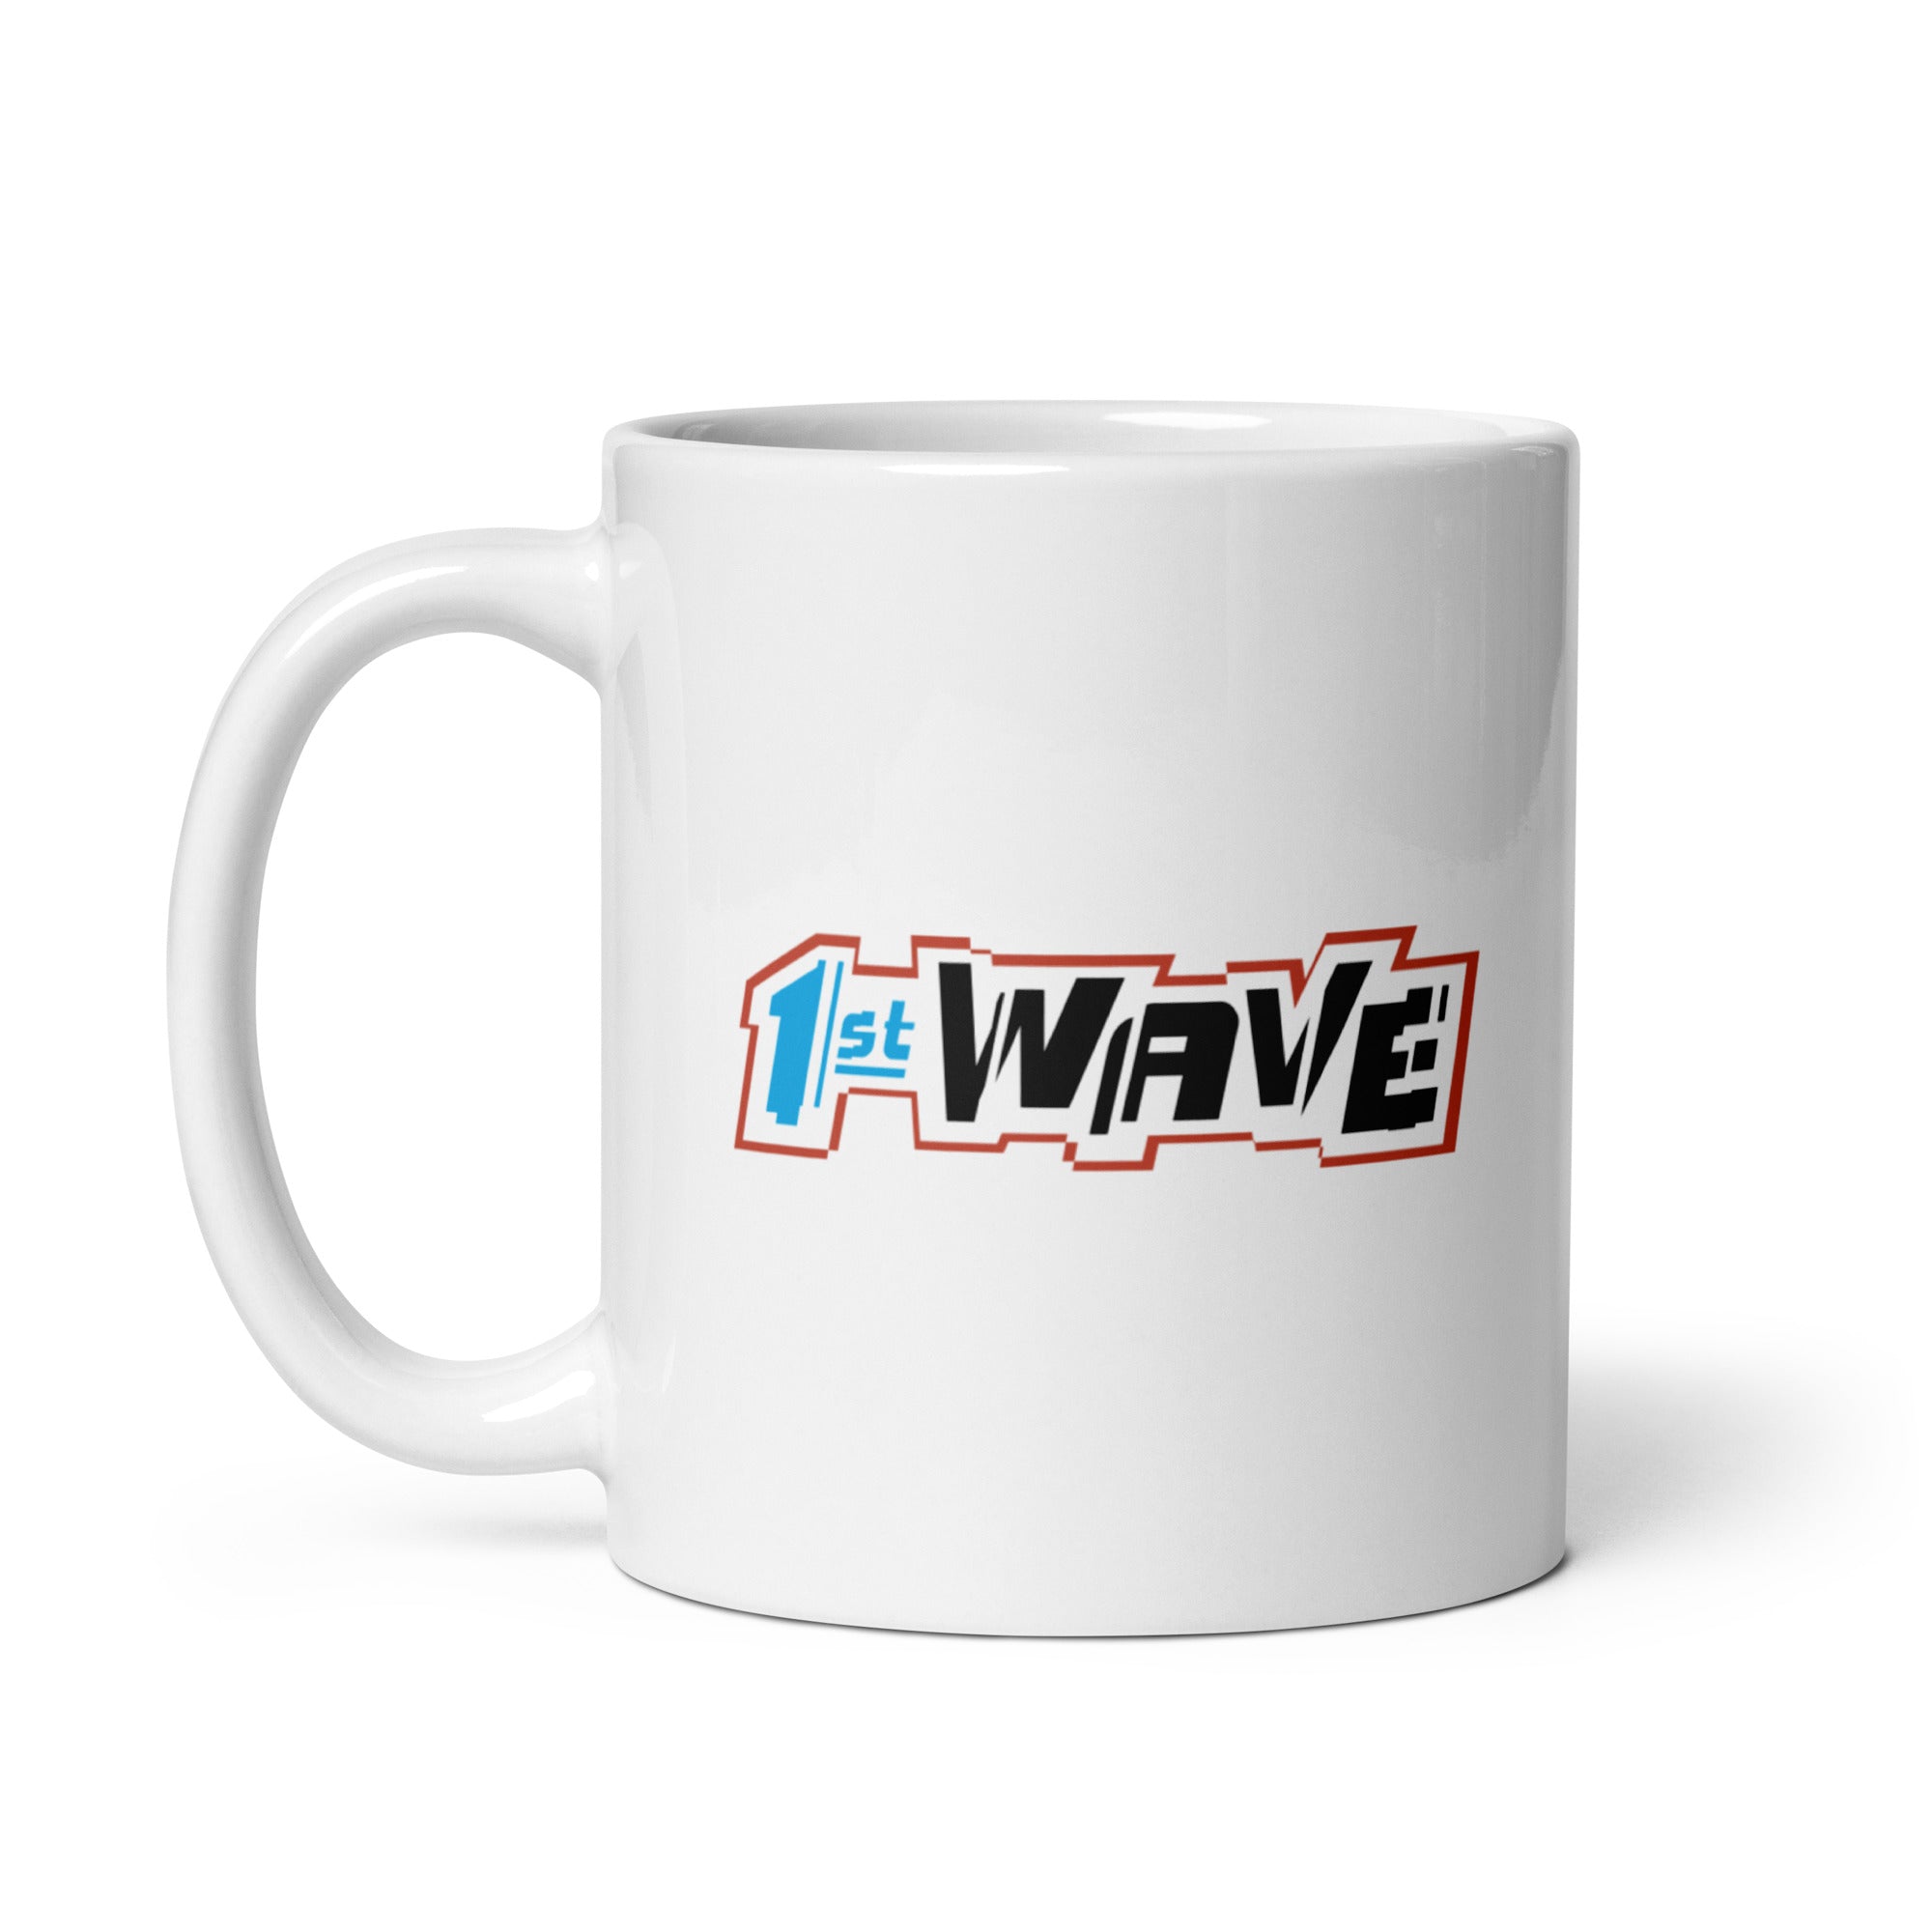 1st Wave: Mug